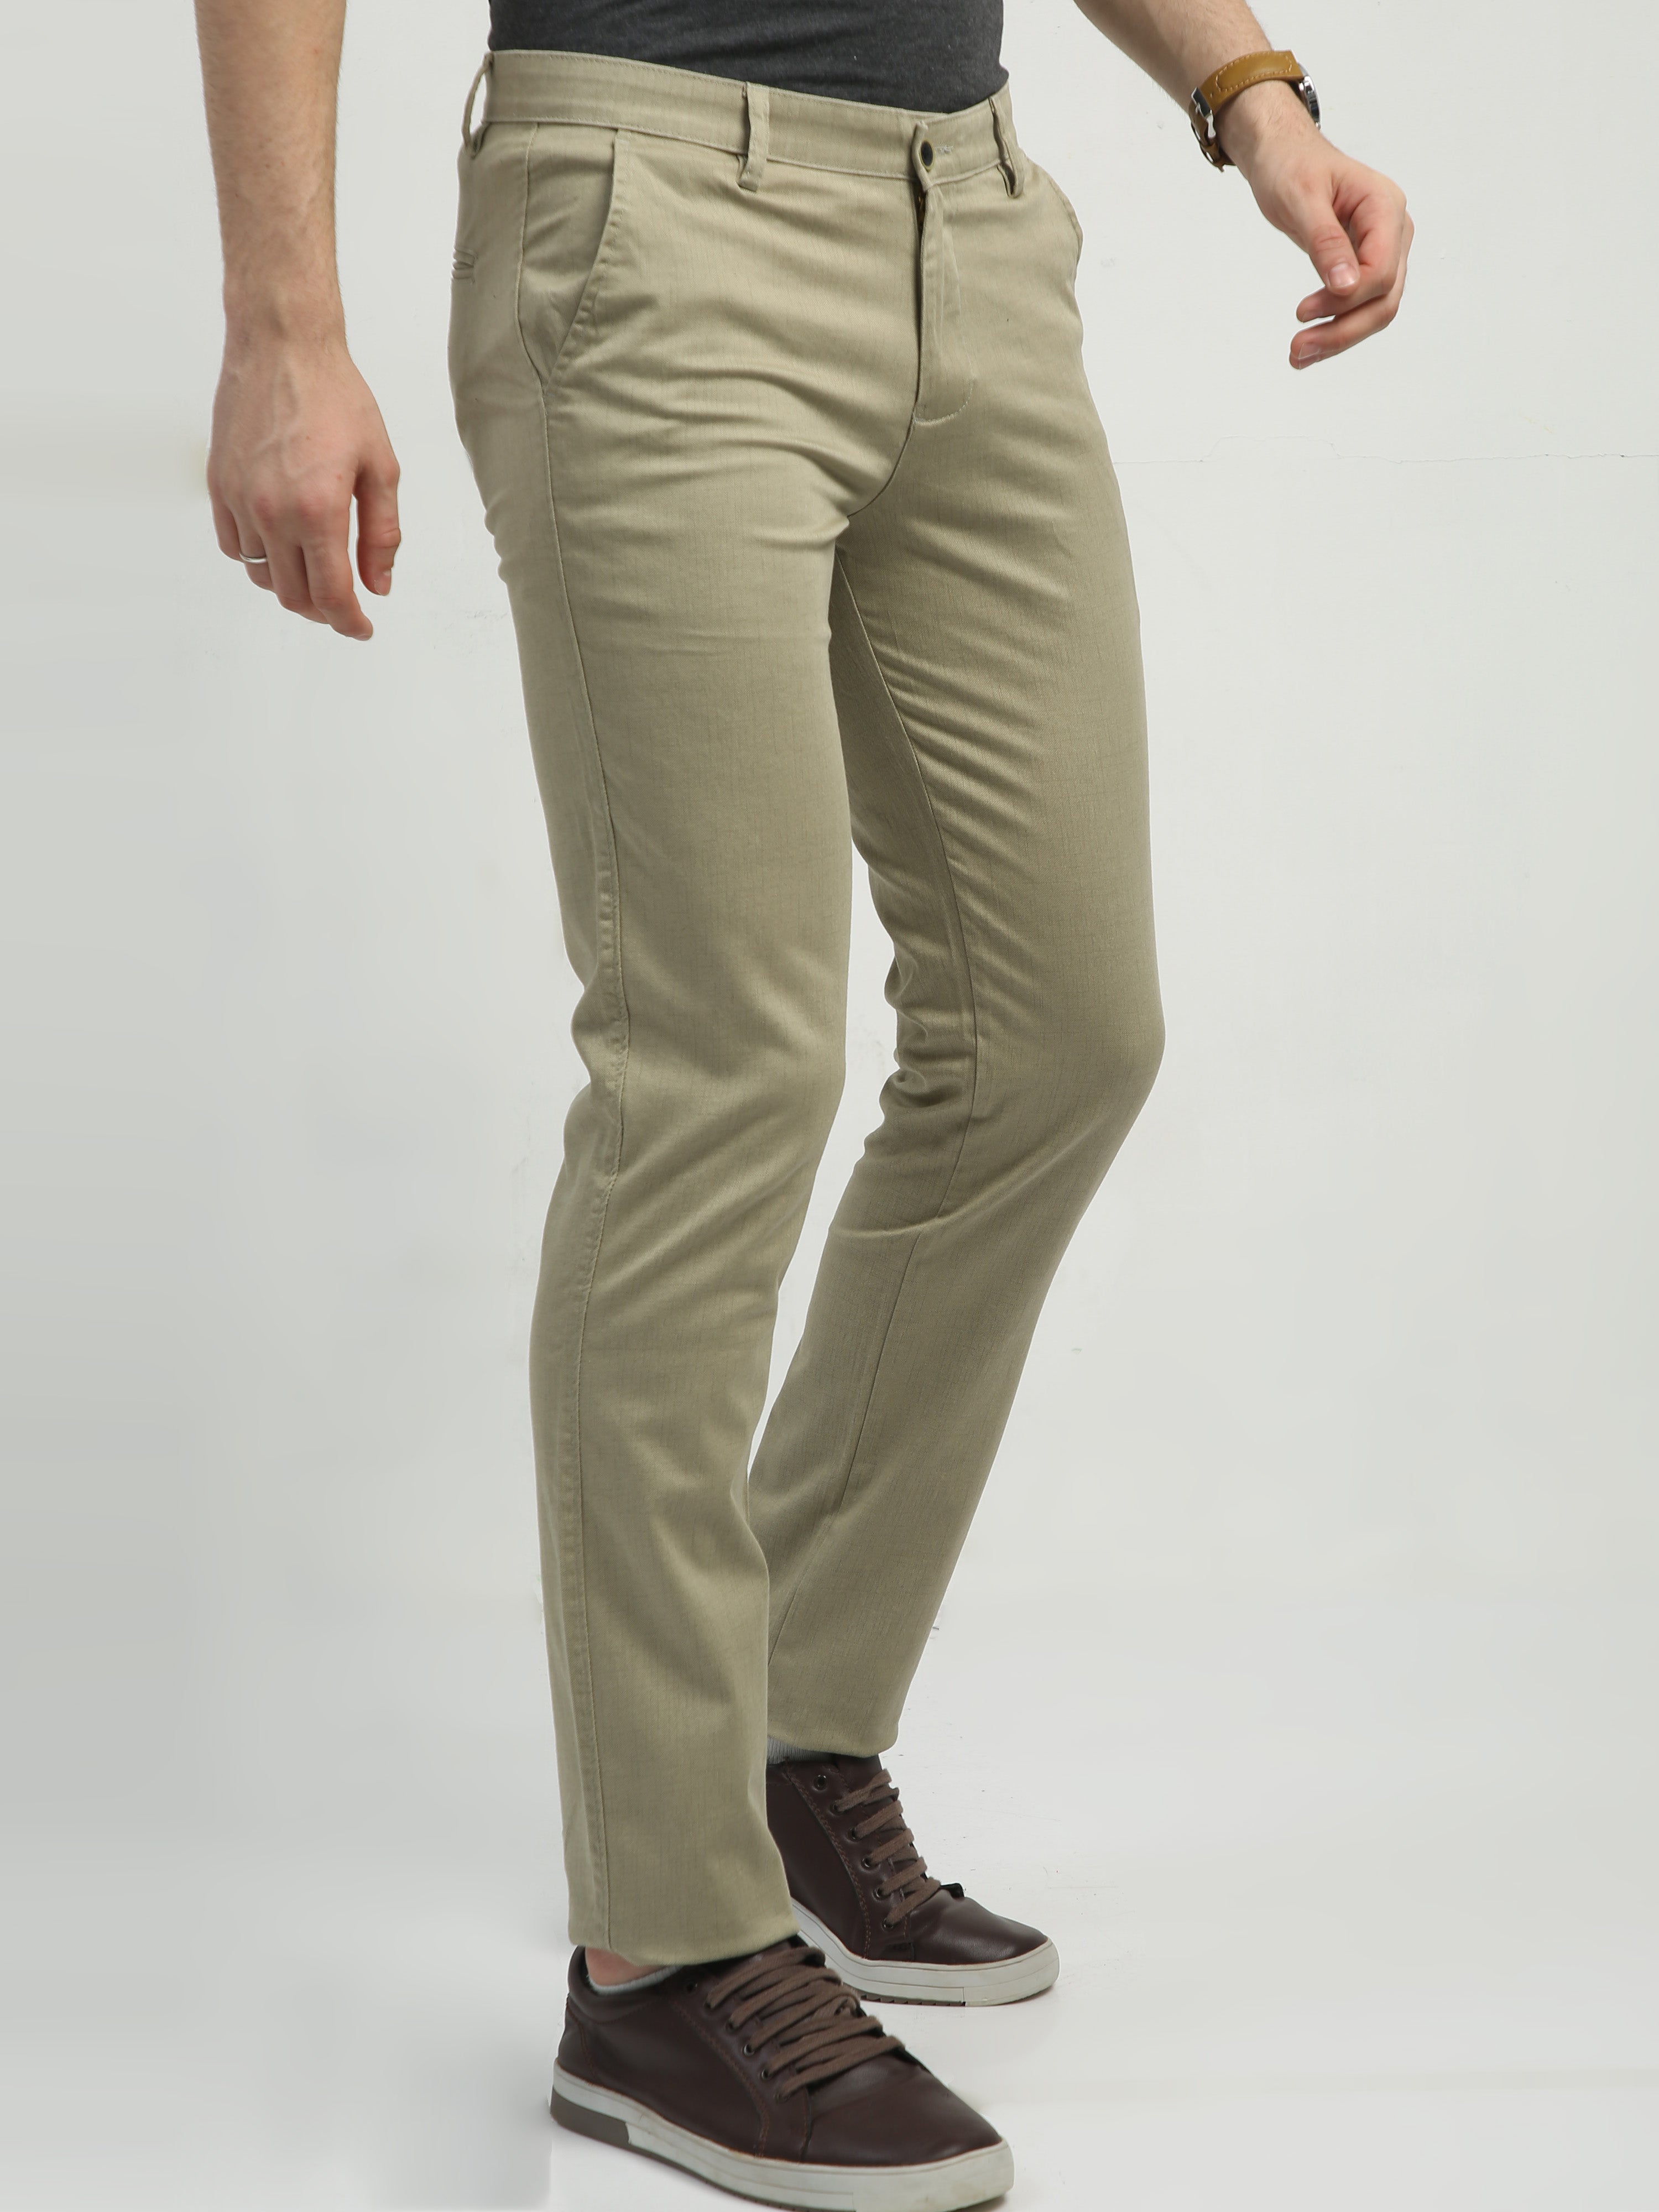 Formal Trouser: Buy Men Navy Blue Cotton Formal Trouser | Cliths